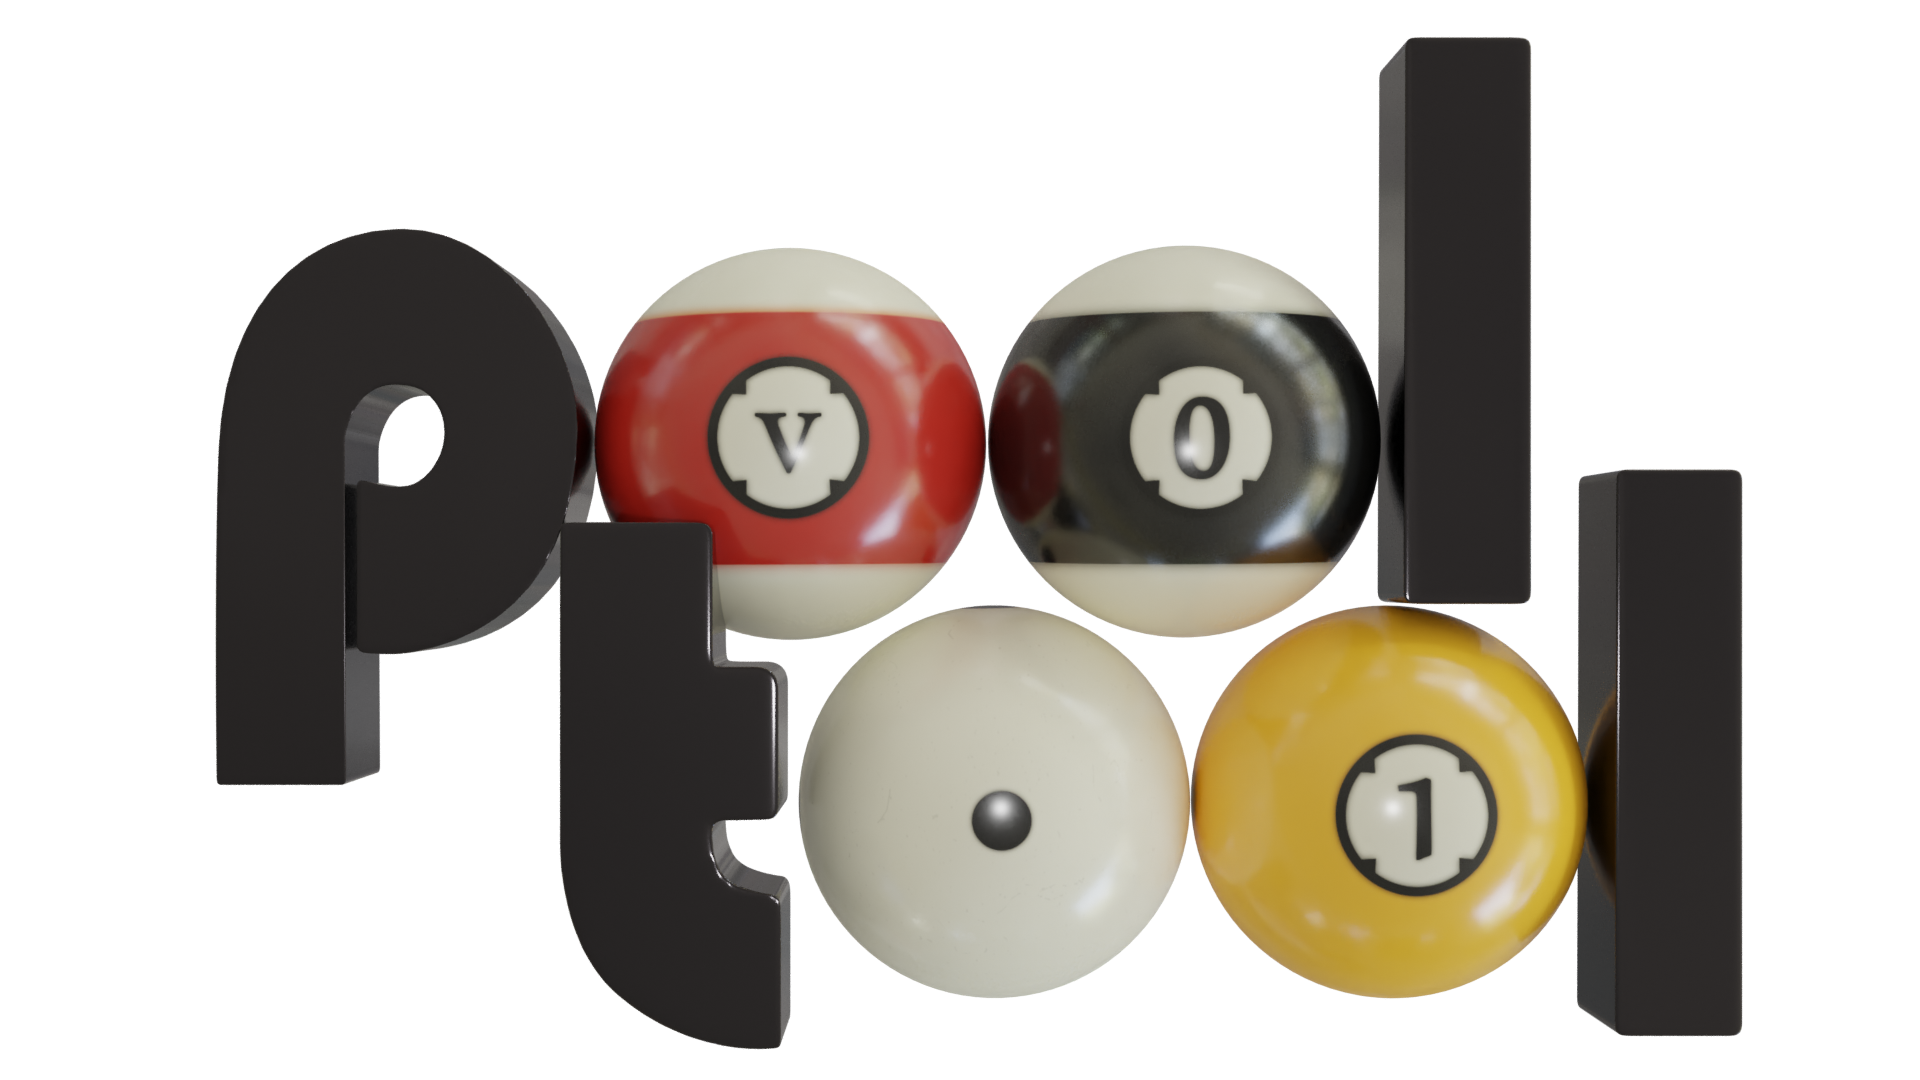 Pooltool: a sandbox billiards game/tool - Showcase - Panda3D